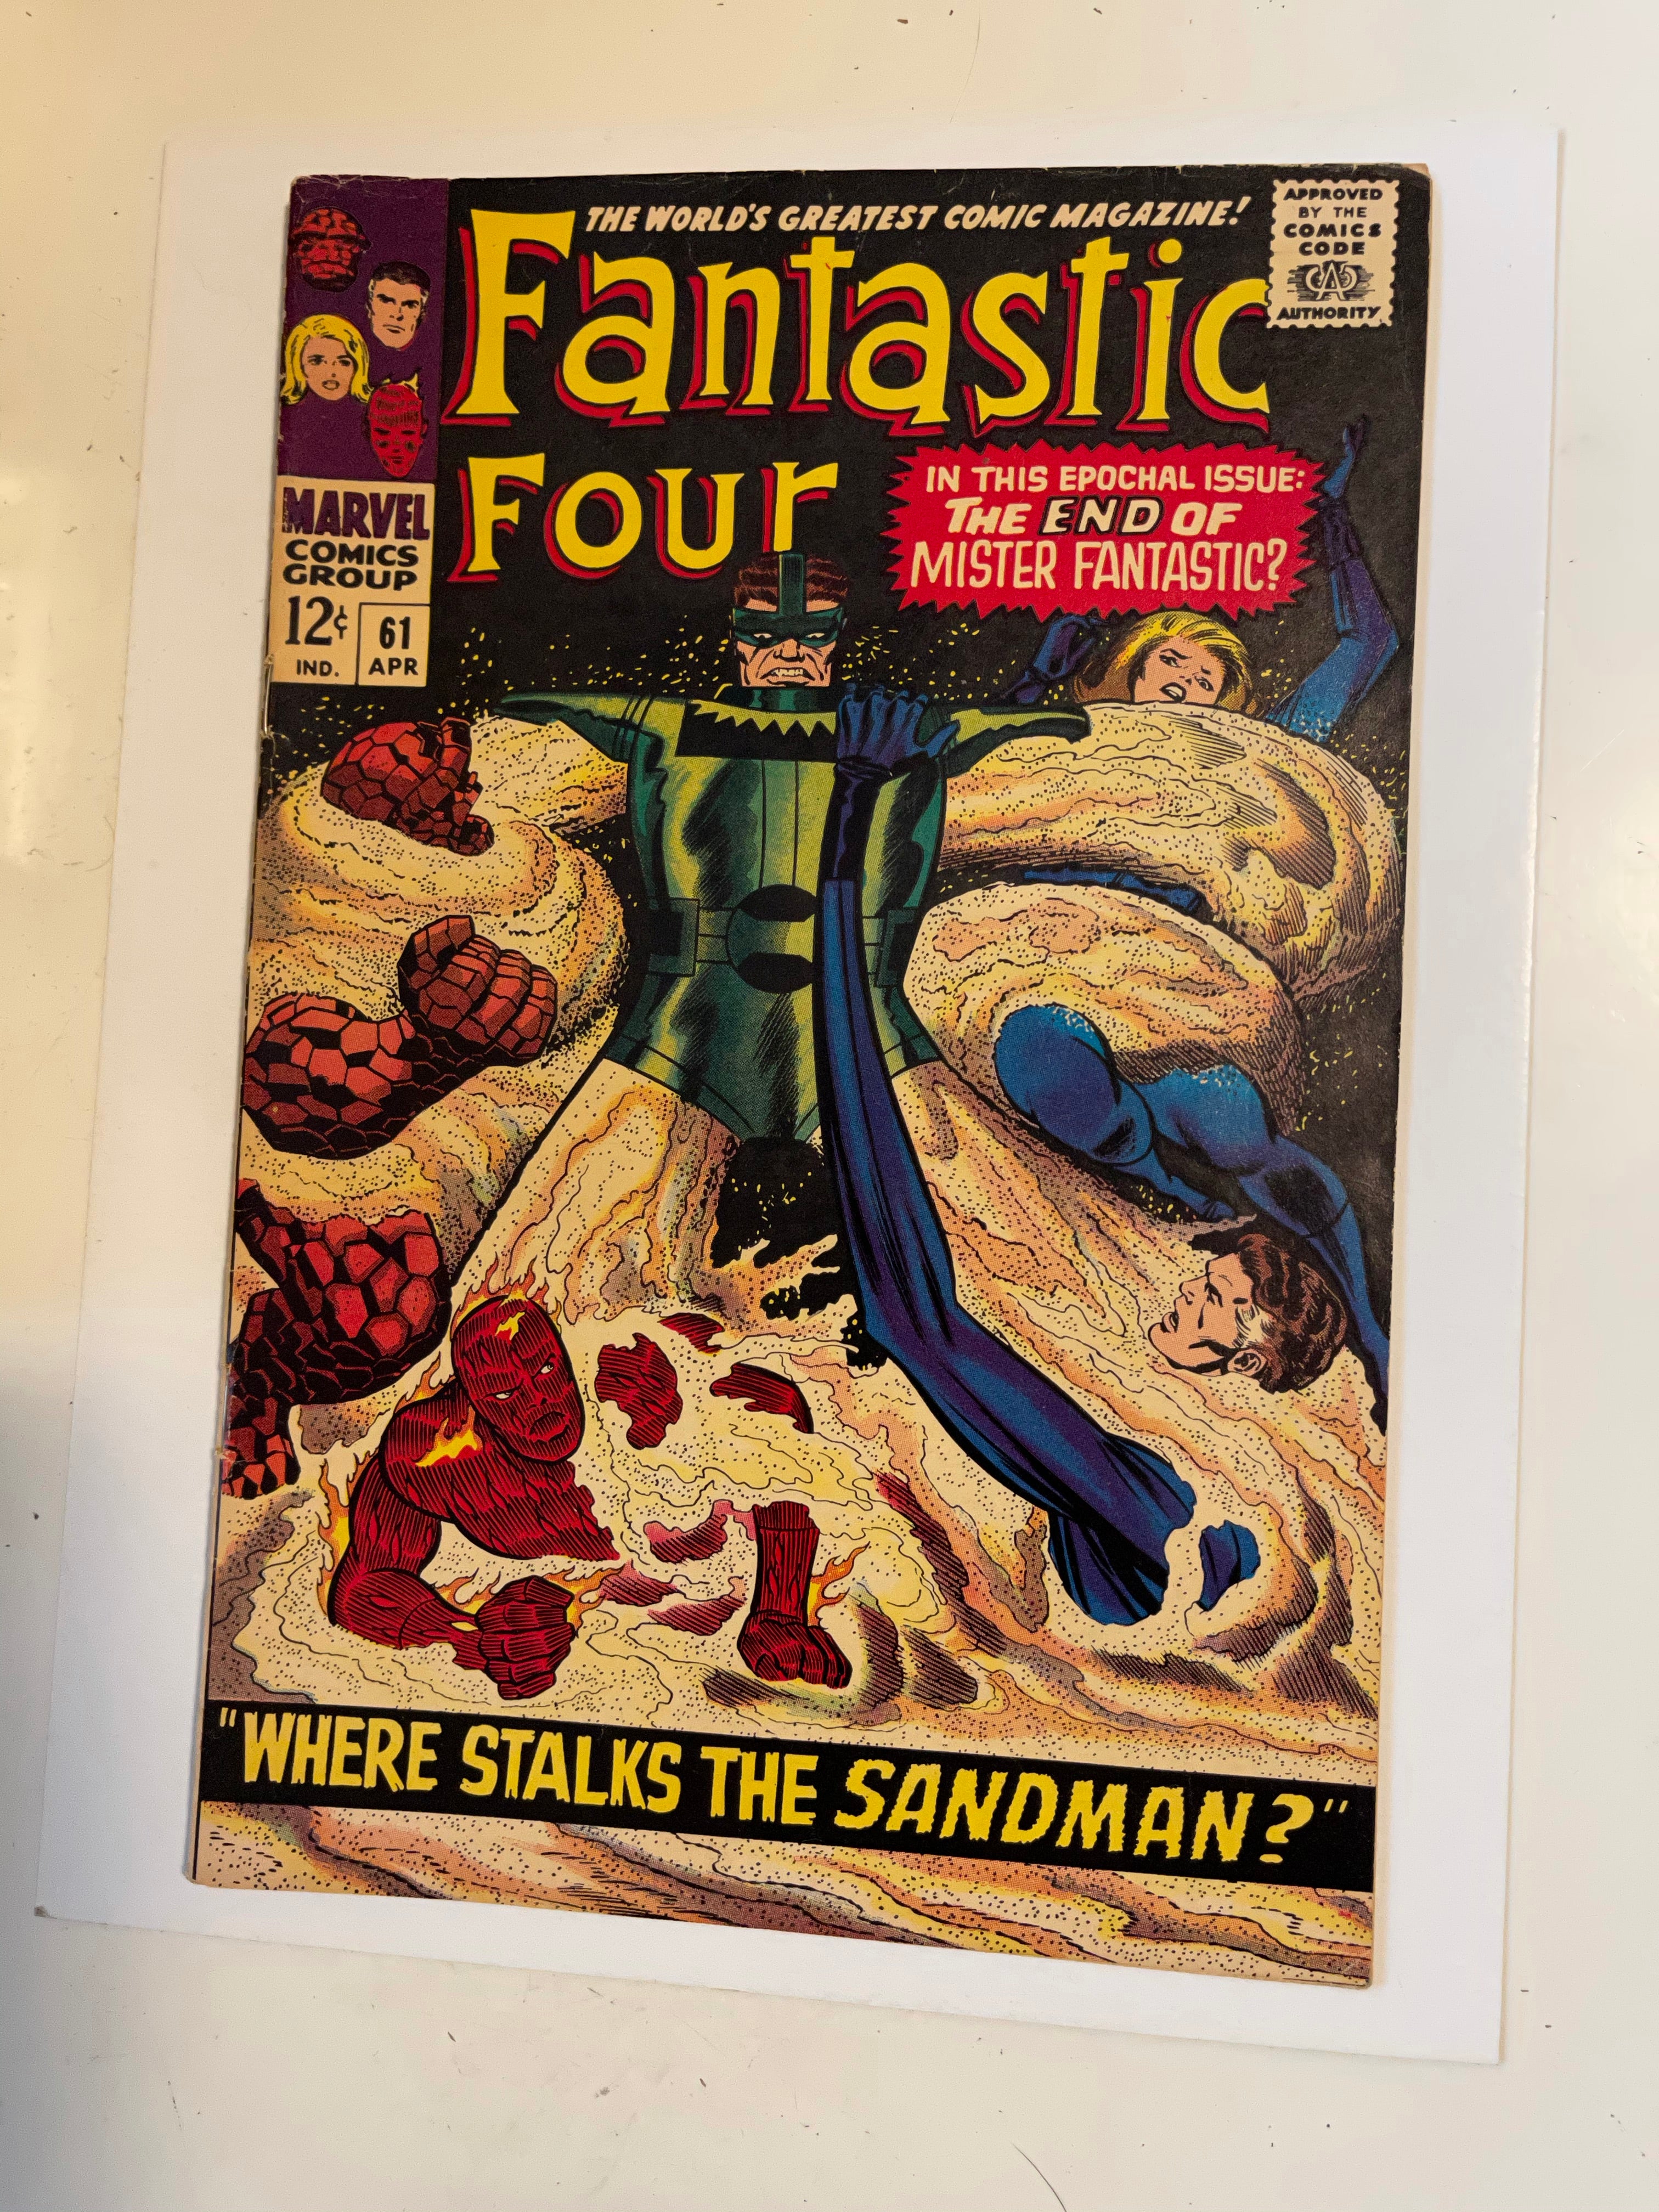 Fantastic Four #61 comic book 1967